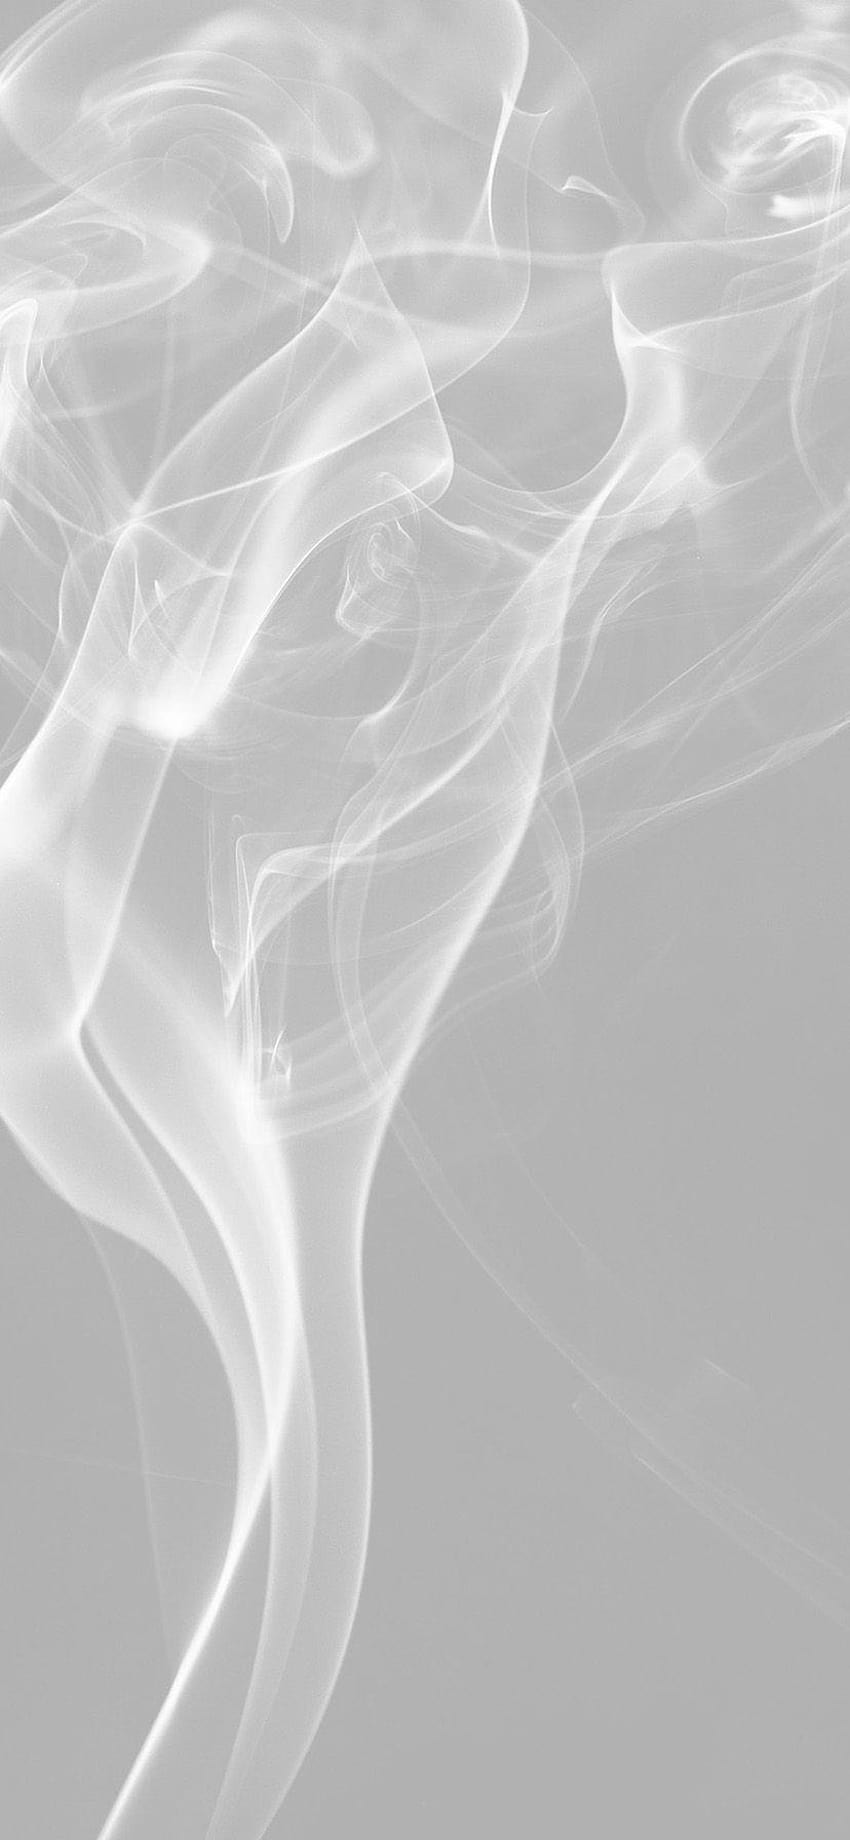 iPhoneWalls vi51 gris ahumado bw textura humo brumoso diseño iPhone XR fondo de pantalla del teléfono